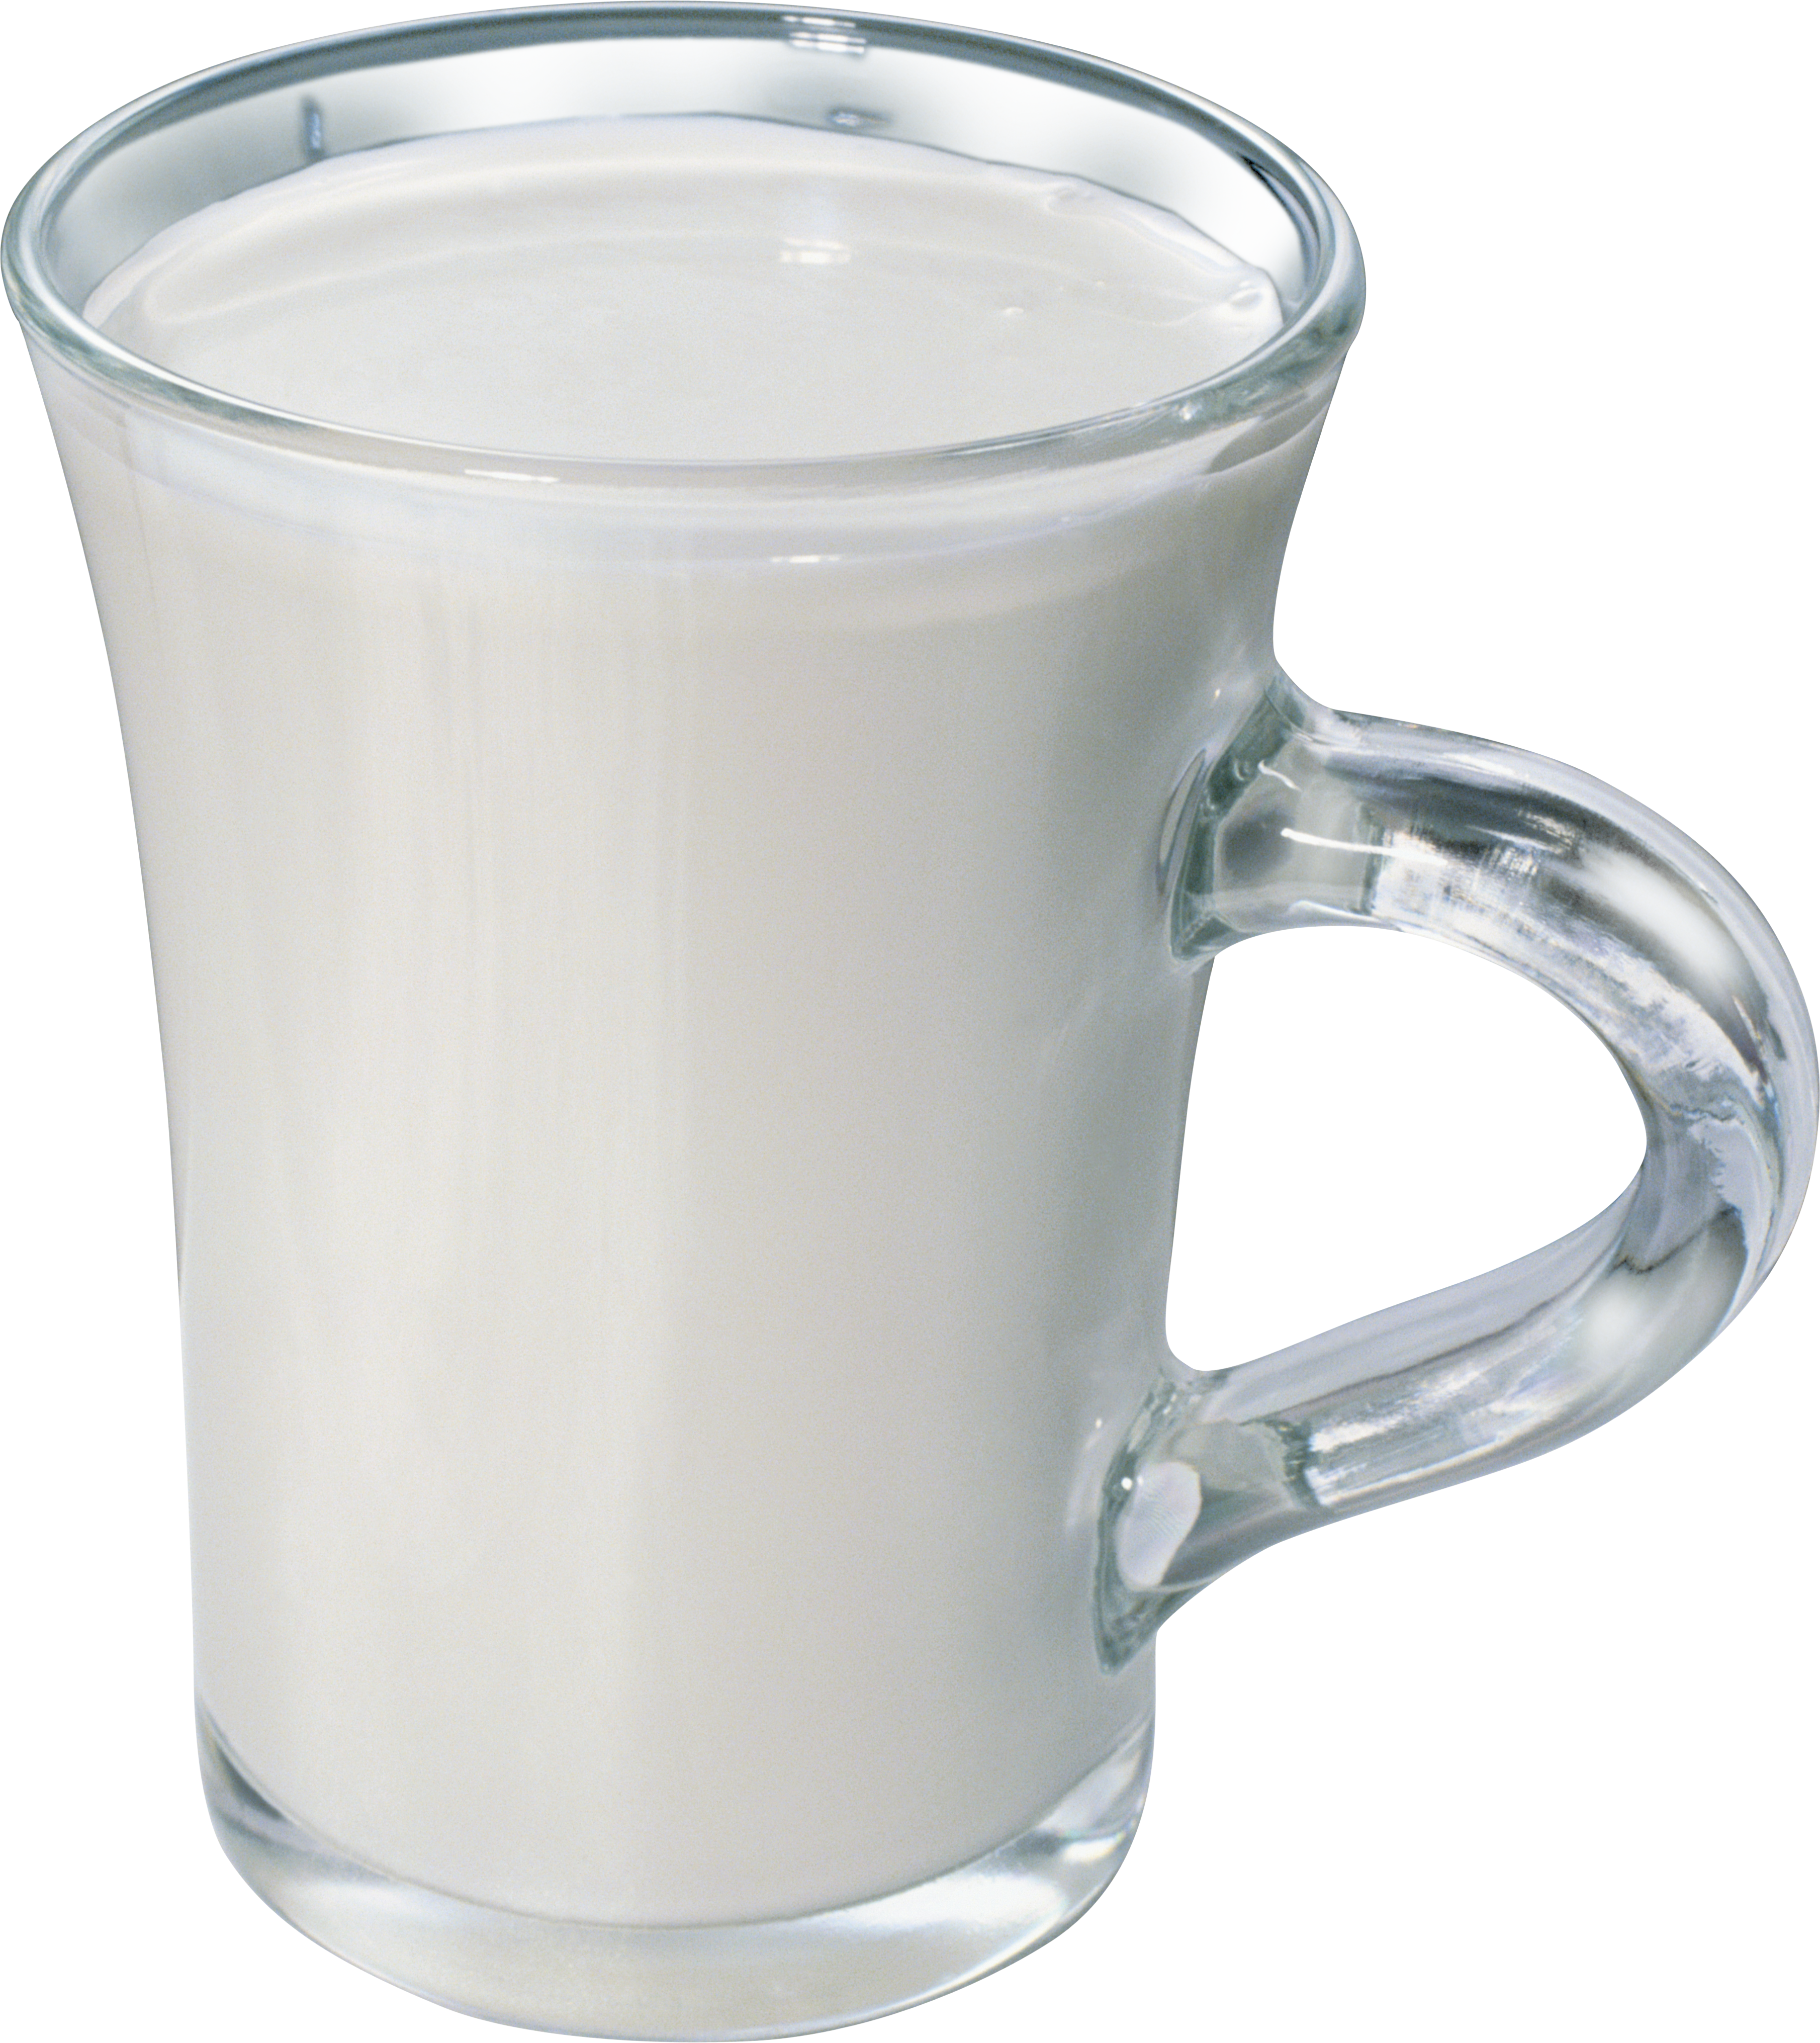 Milk PNG